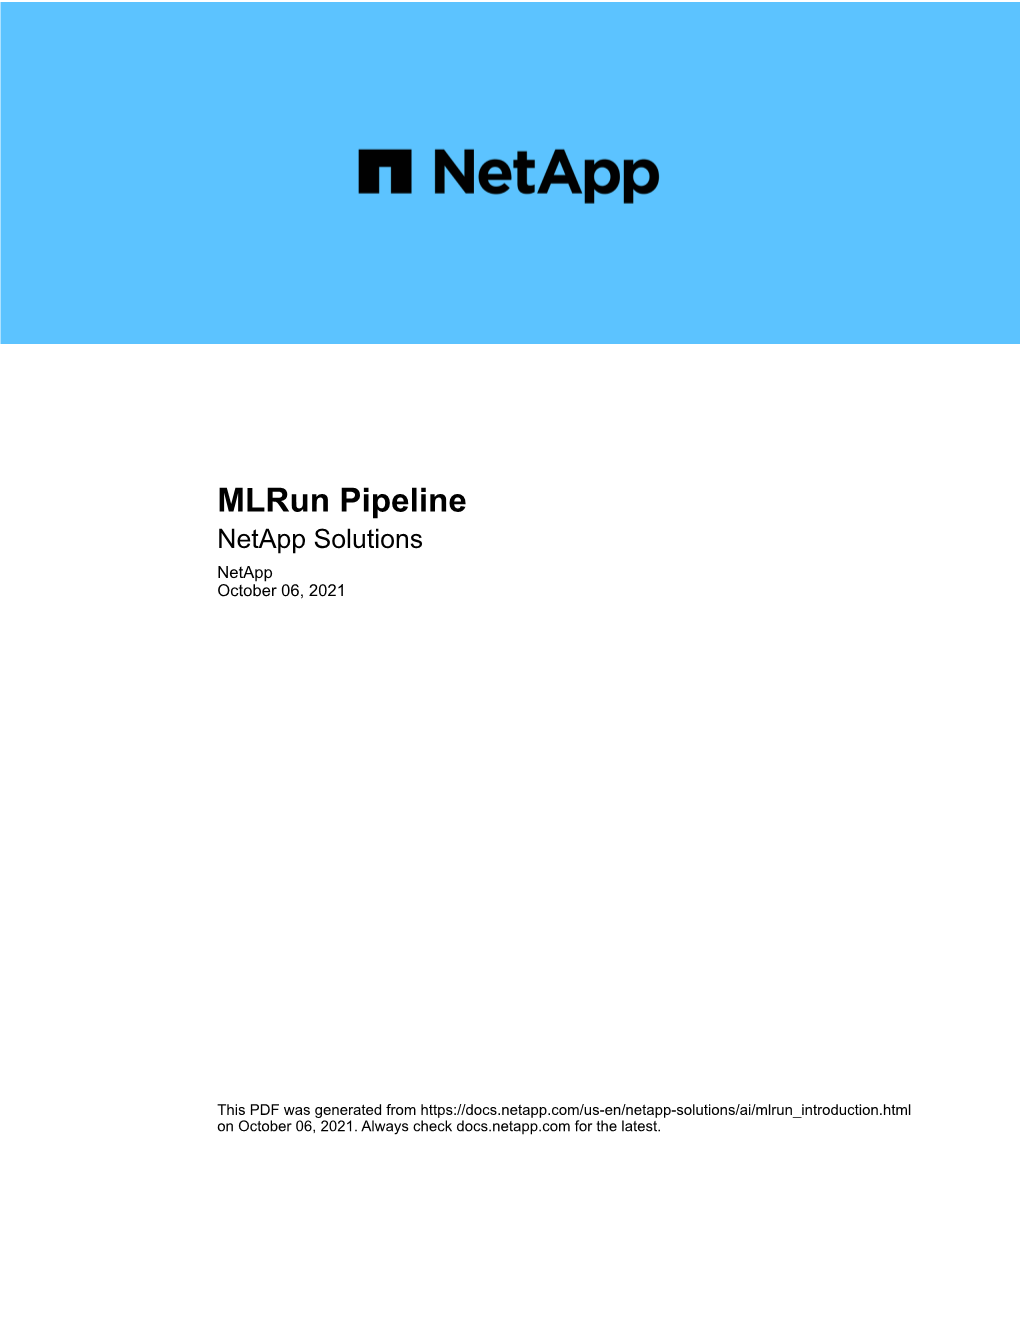 Mlrun Pipeline : Netapp Solutions